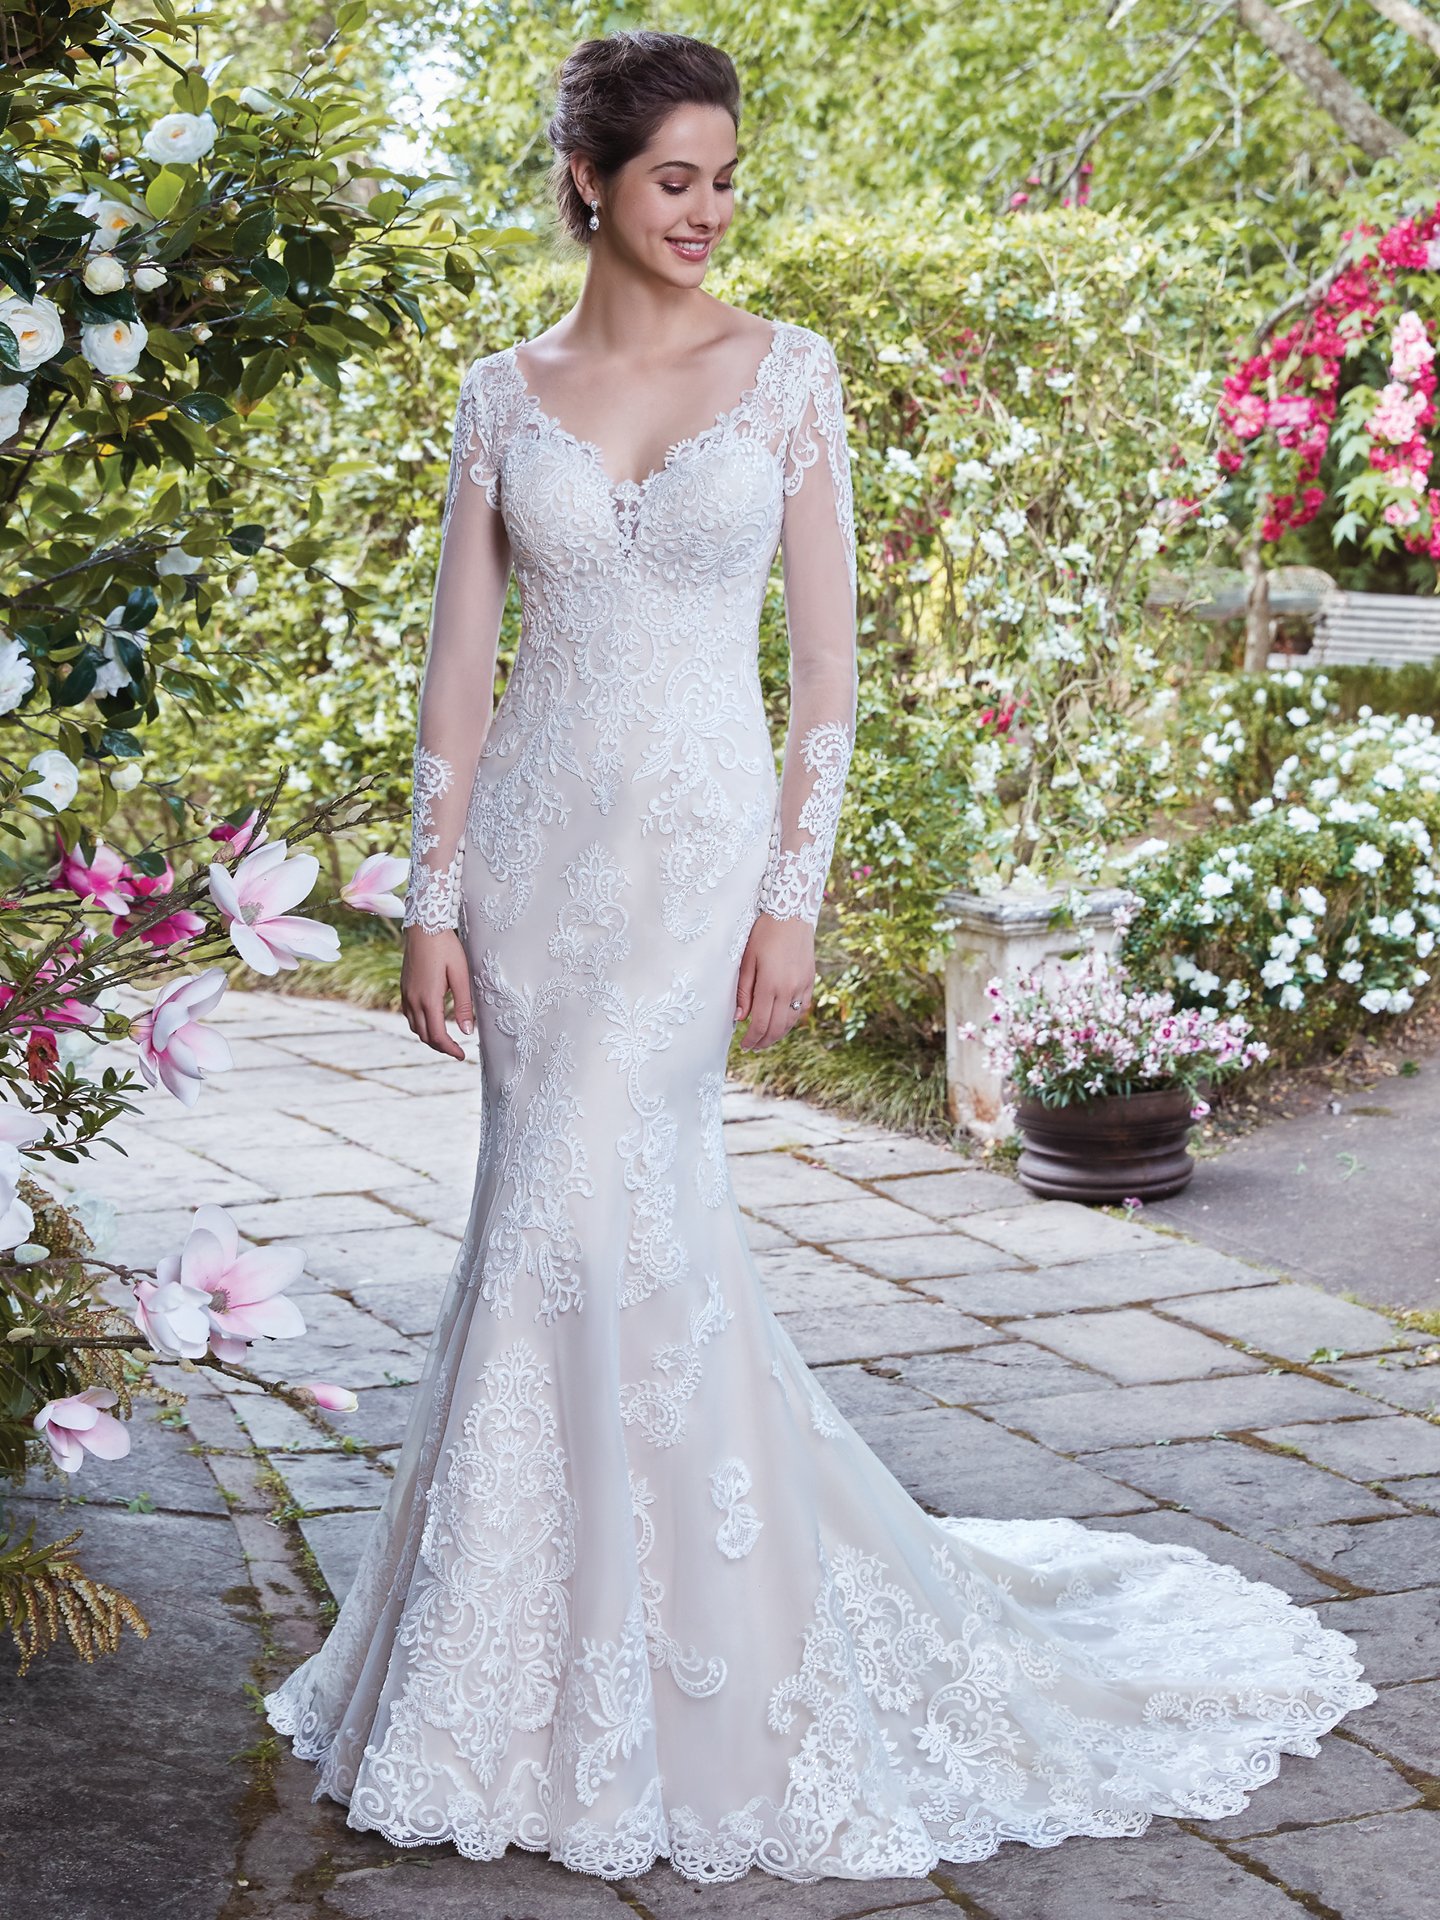 3 Beautiful Dresses for 3 Budget Weddings - Maeve sleeved wedding dress by Rebecca Ingram